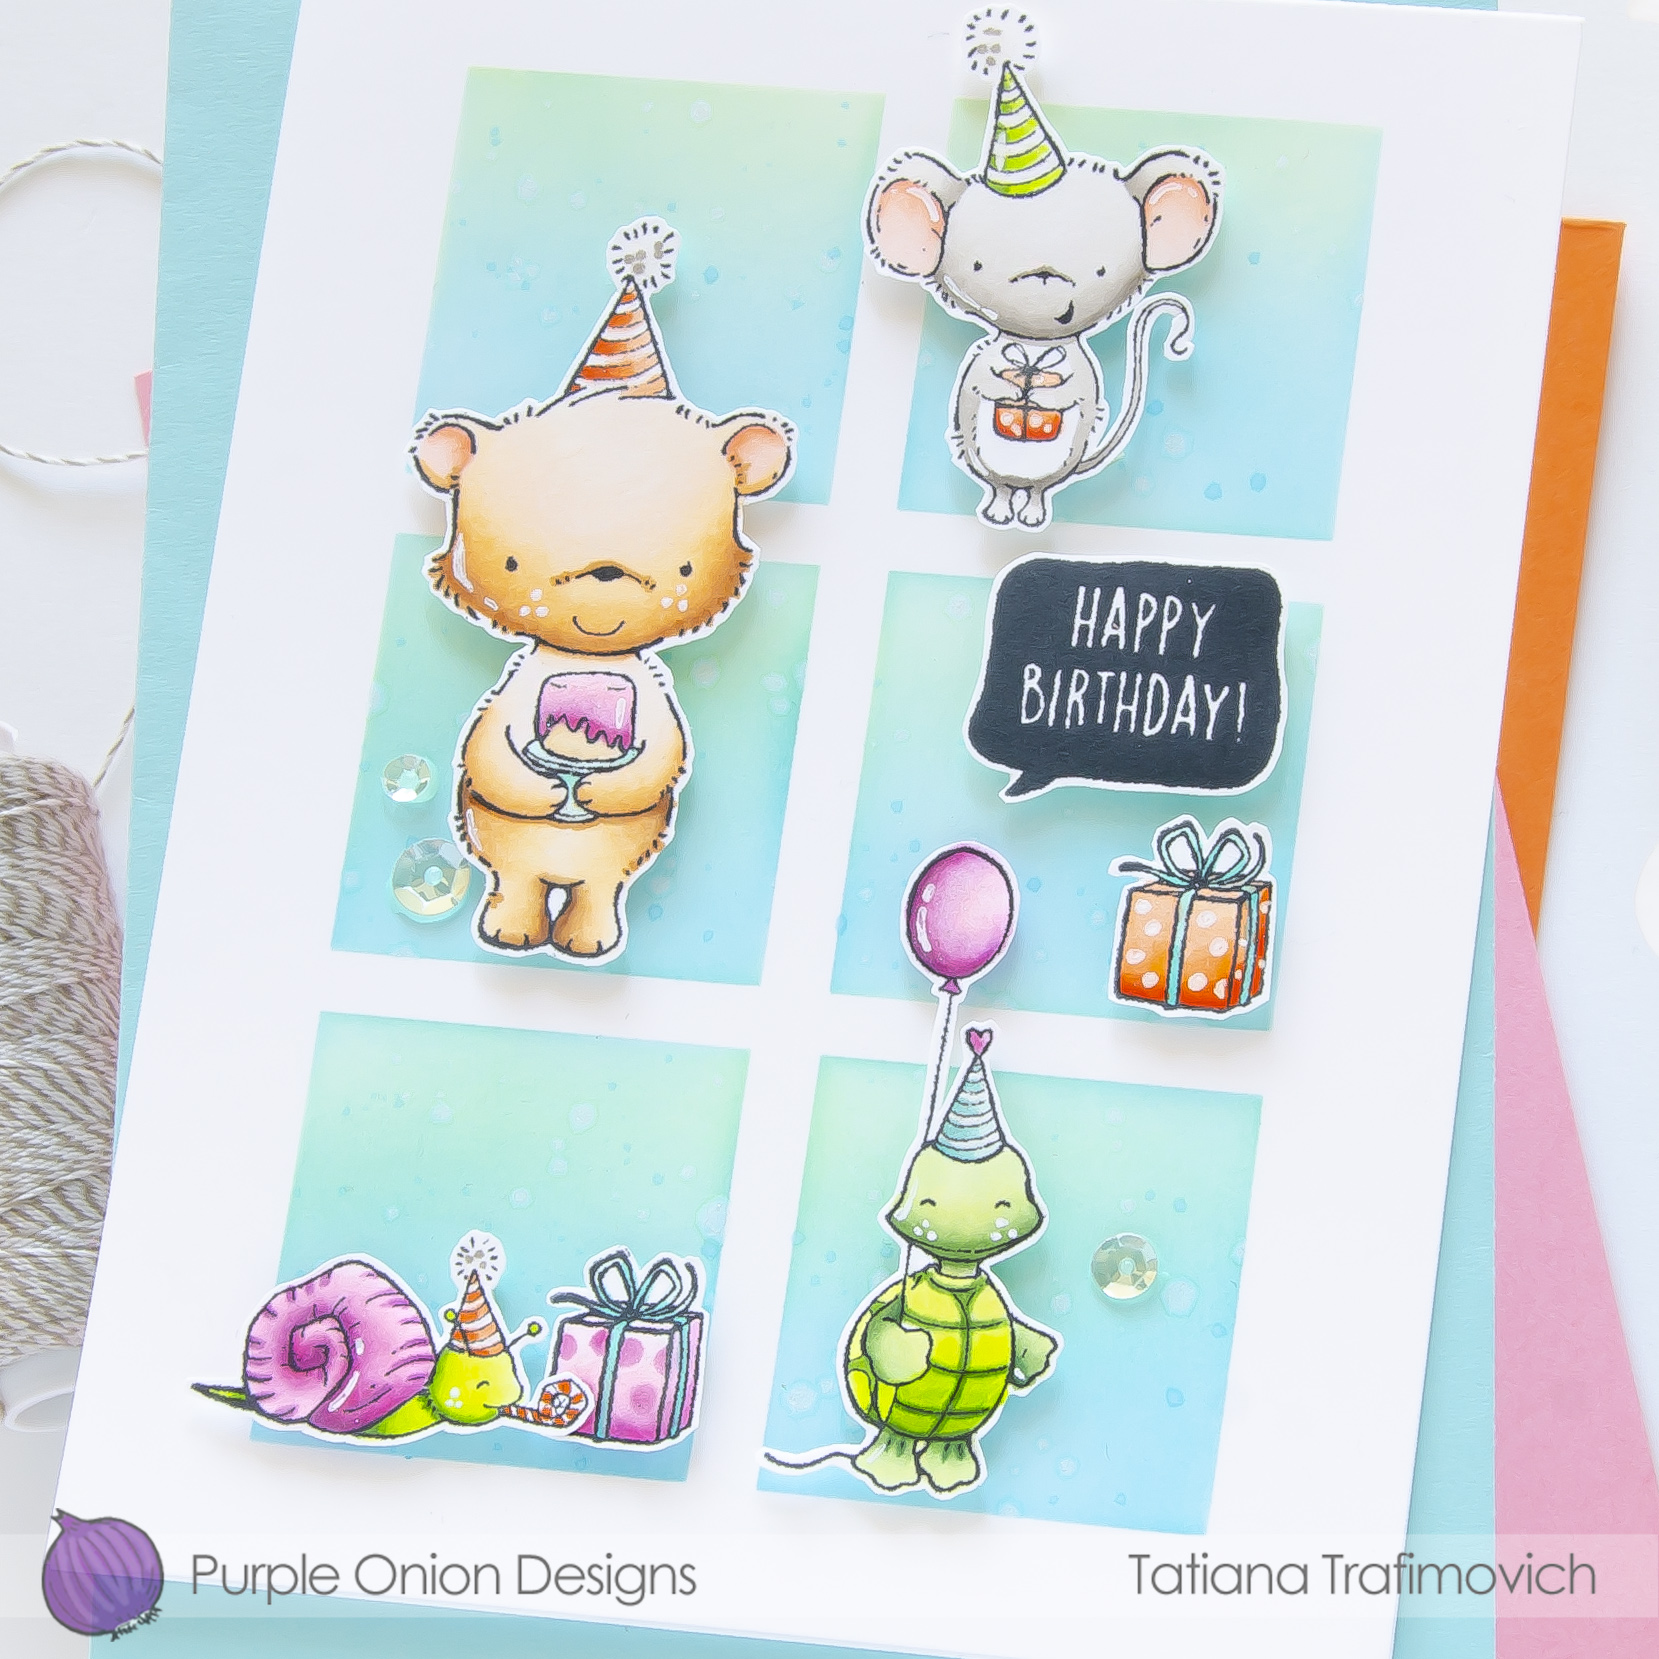 Happy Birthday! #handmade card by Tatiana Trafimovich #tatianacraftandart - stamps by Purple Onion Designs